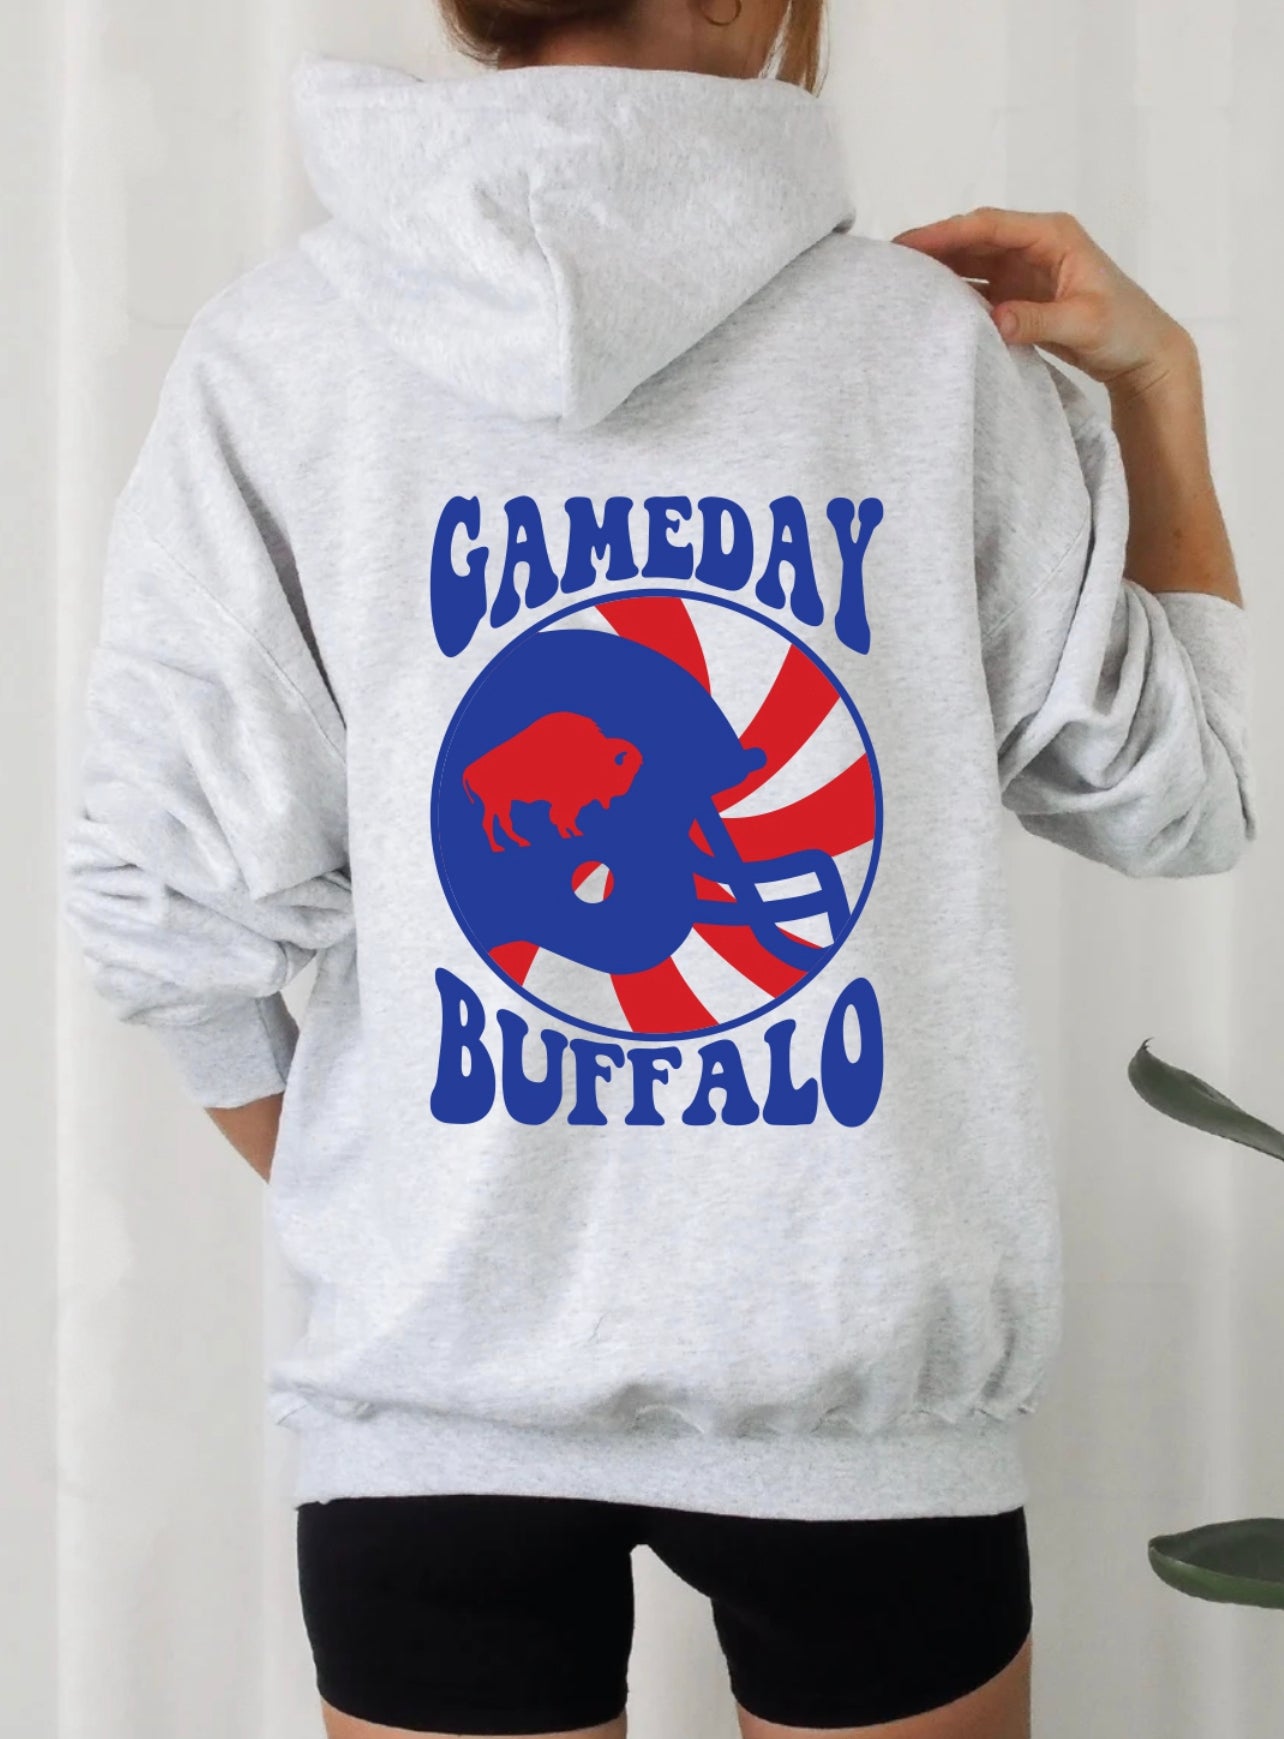 Gameday Buffalo hoodie, Buffalo gameday hoodie, Buffalo Football Hoodie